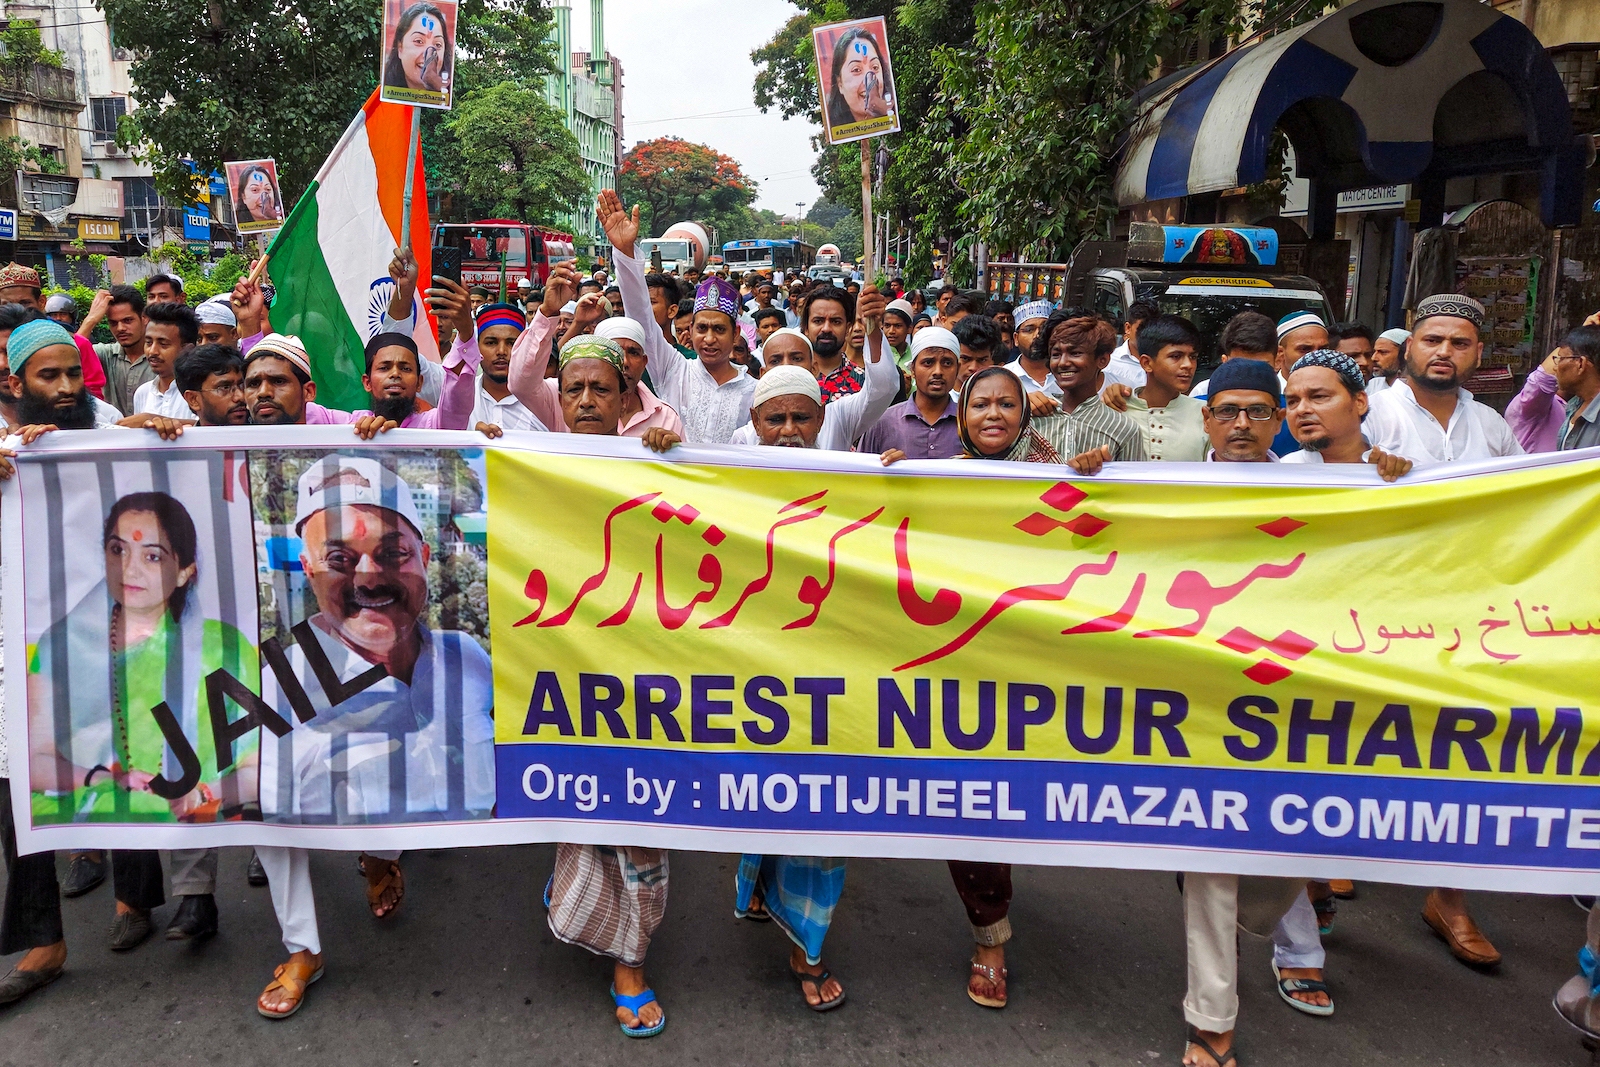 Protest rally demanding arrest of Nupur Sharma